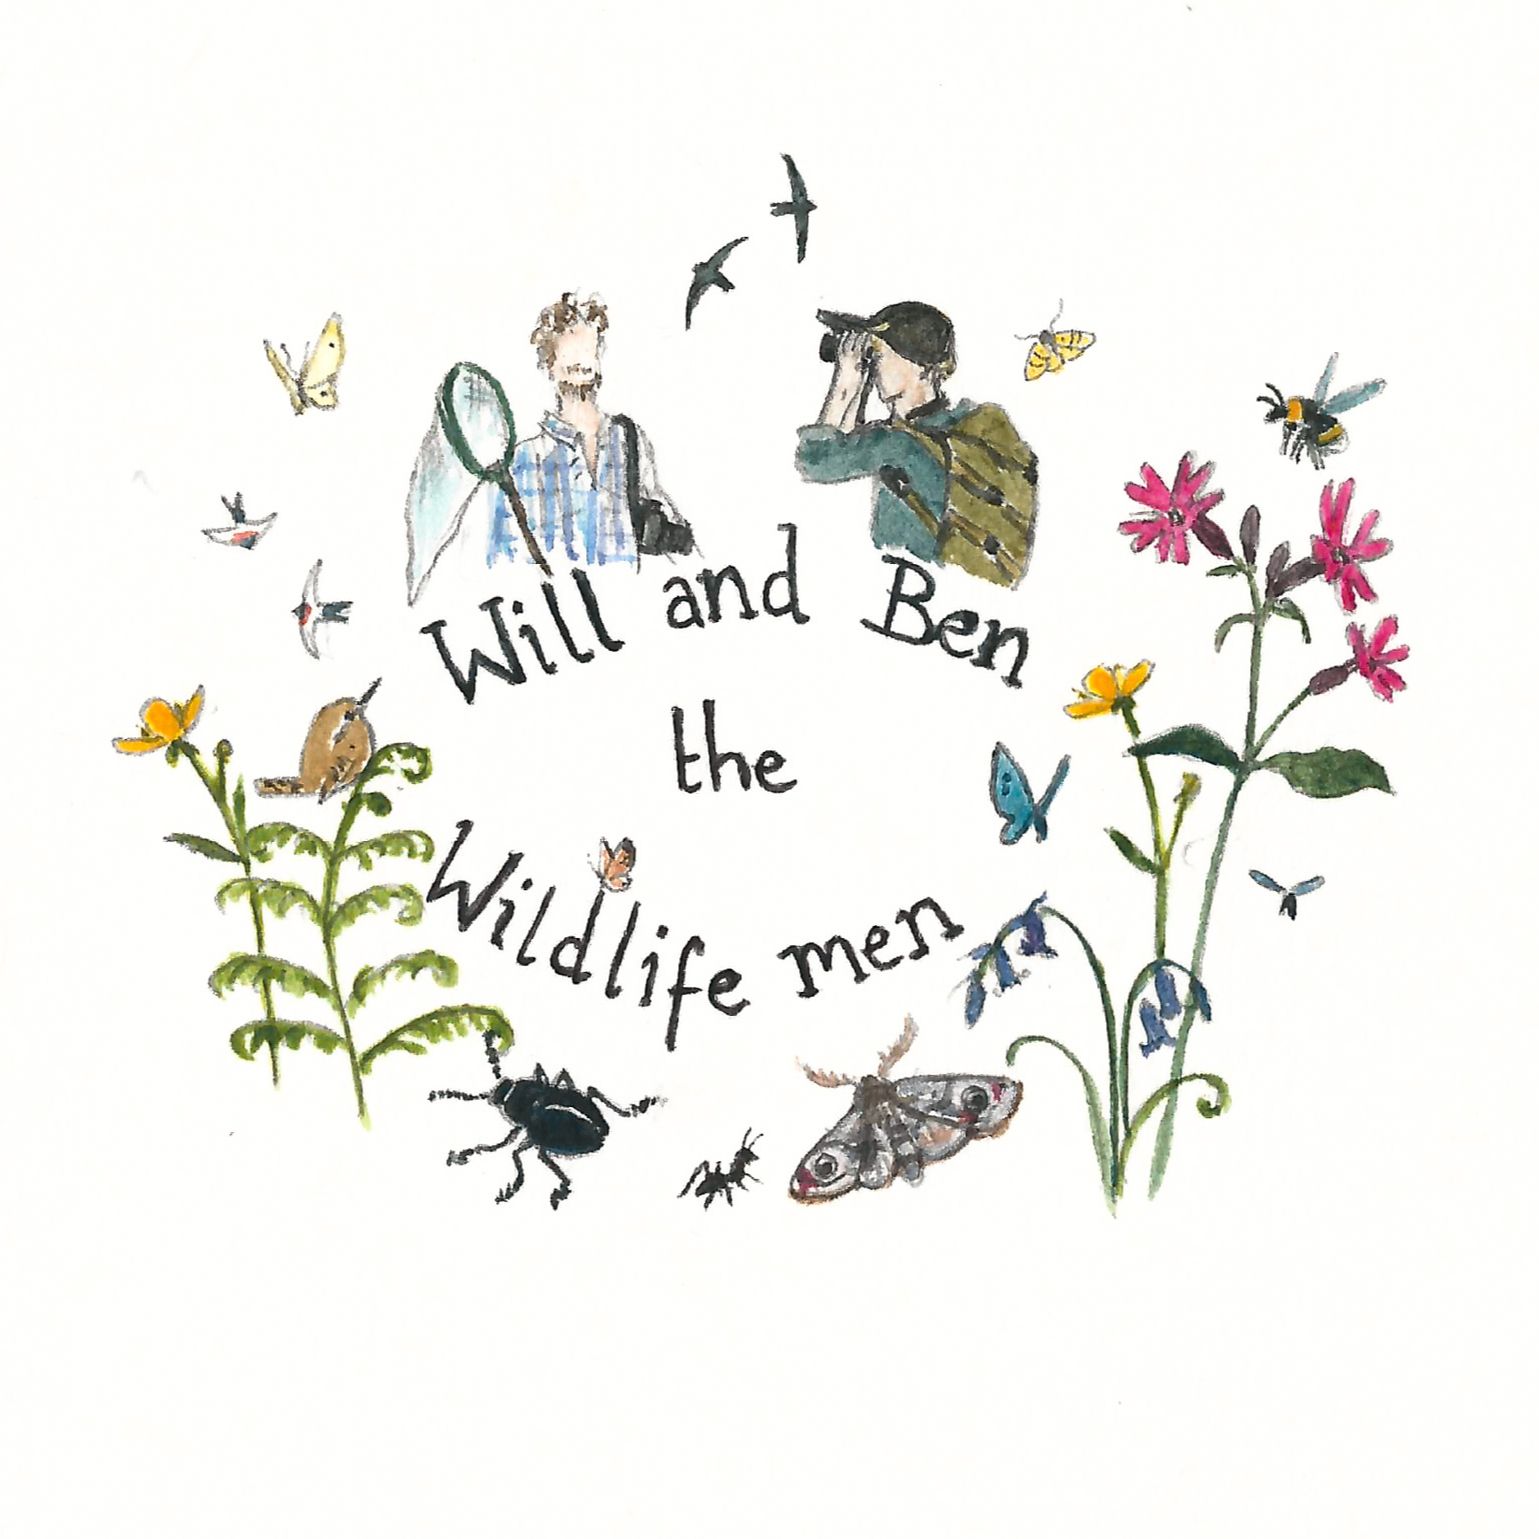 Will and Ben, the Wildlife Men